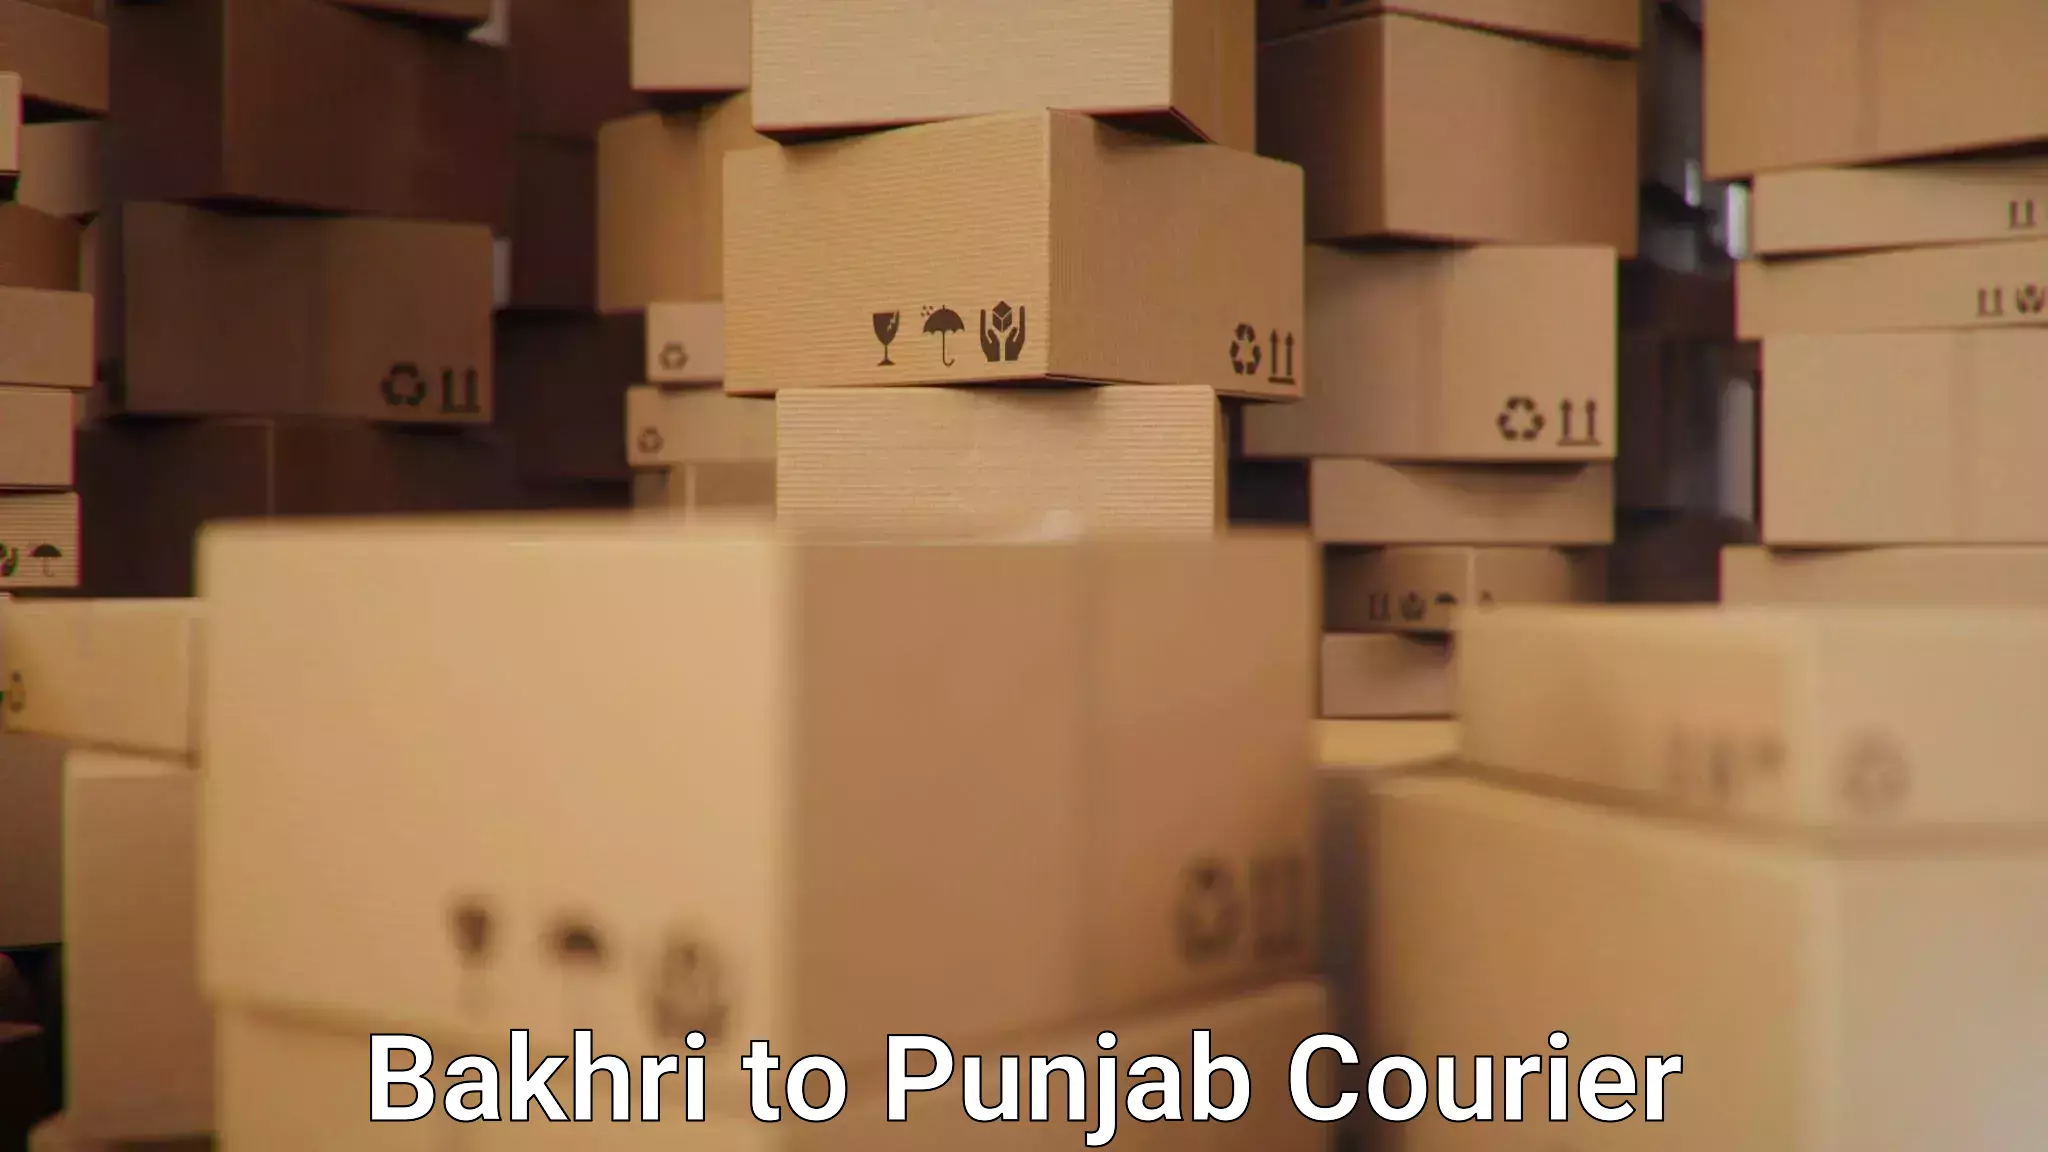 Global logistics network Bakhri to Punjab